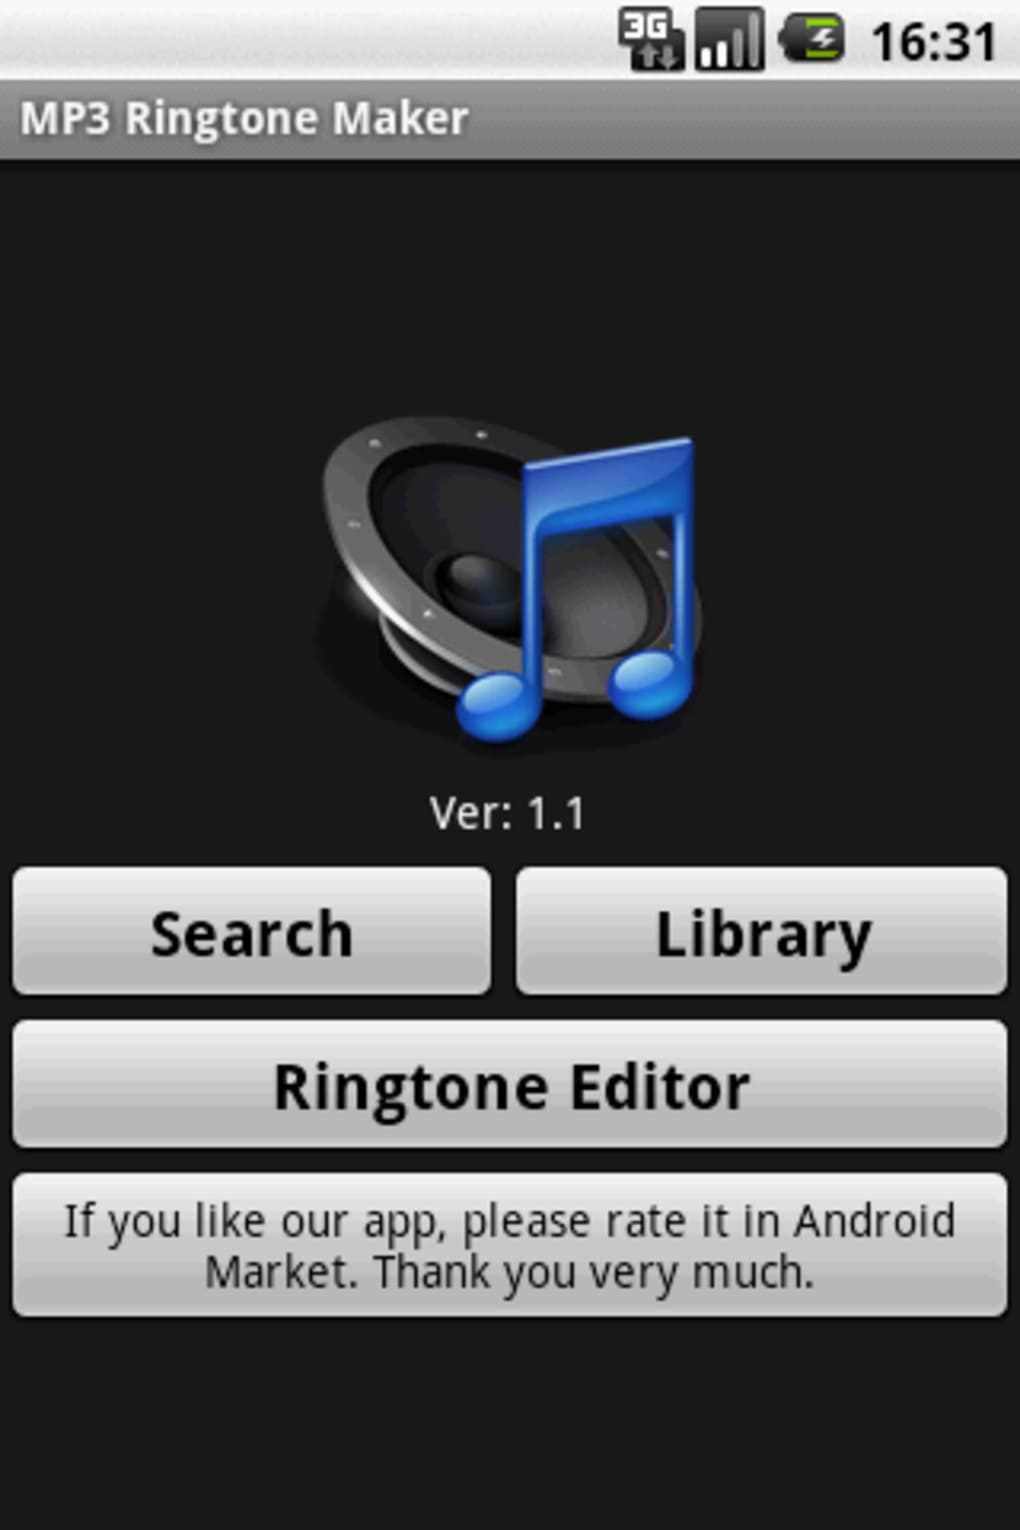 mp3 song ringtone maker software free download